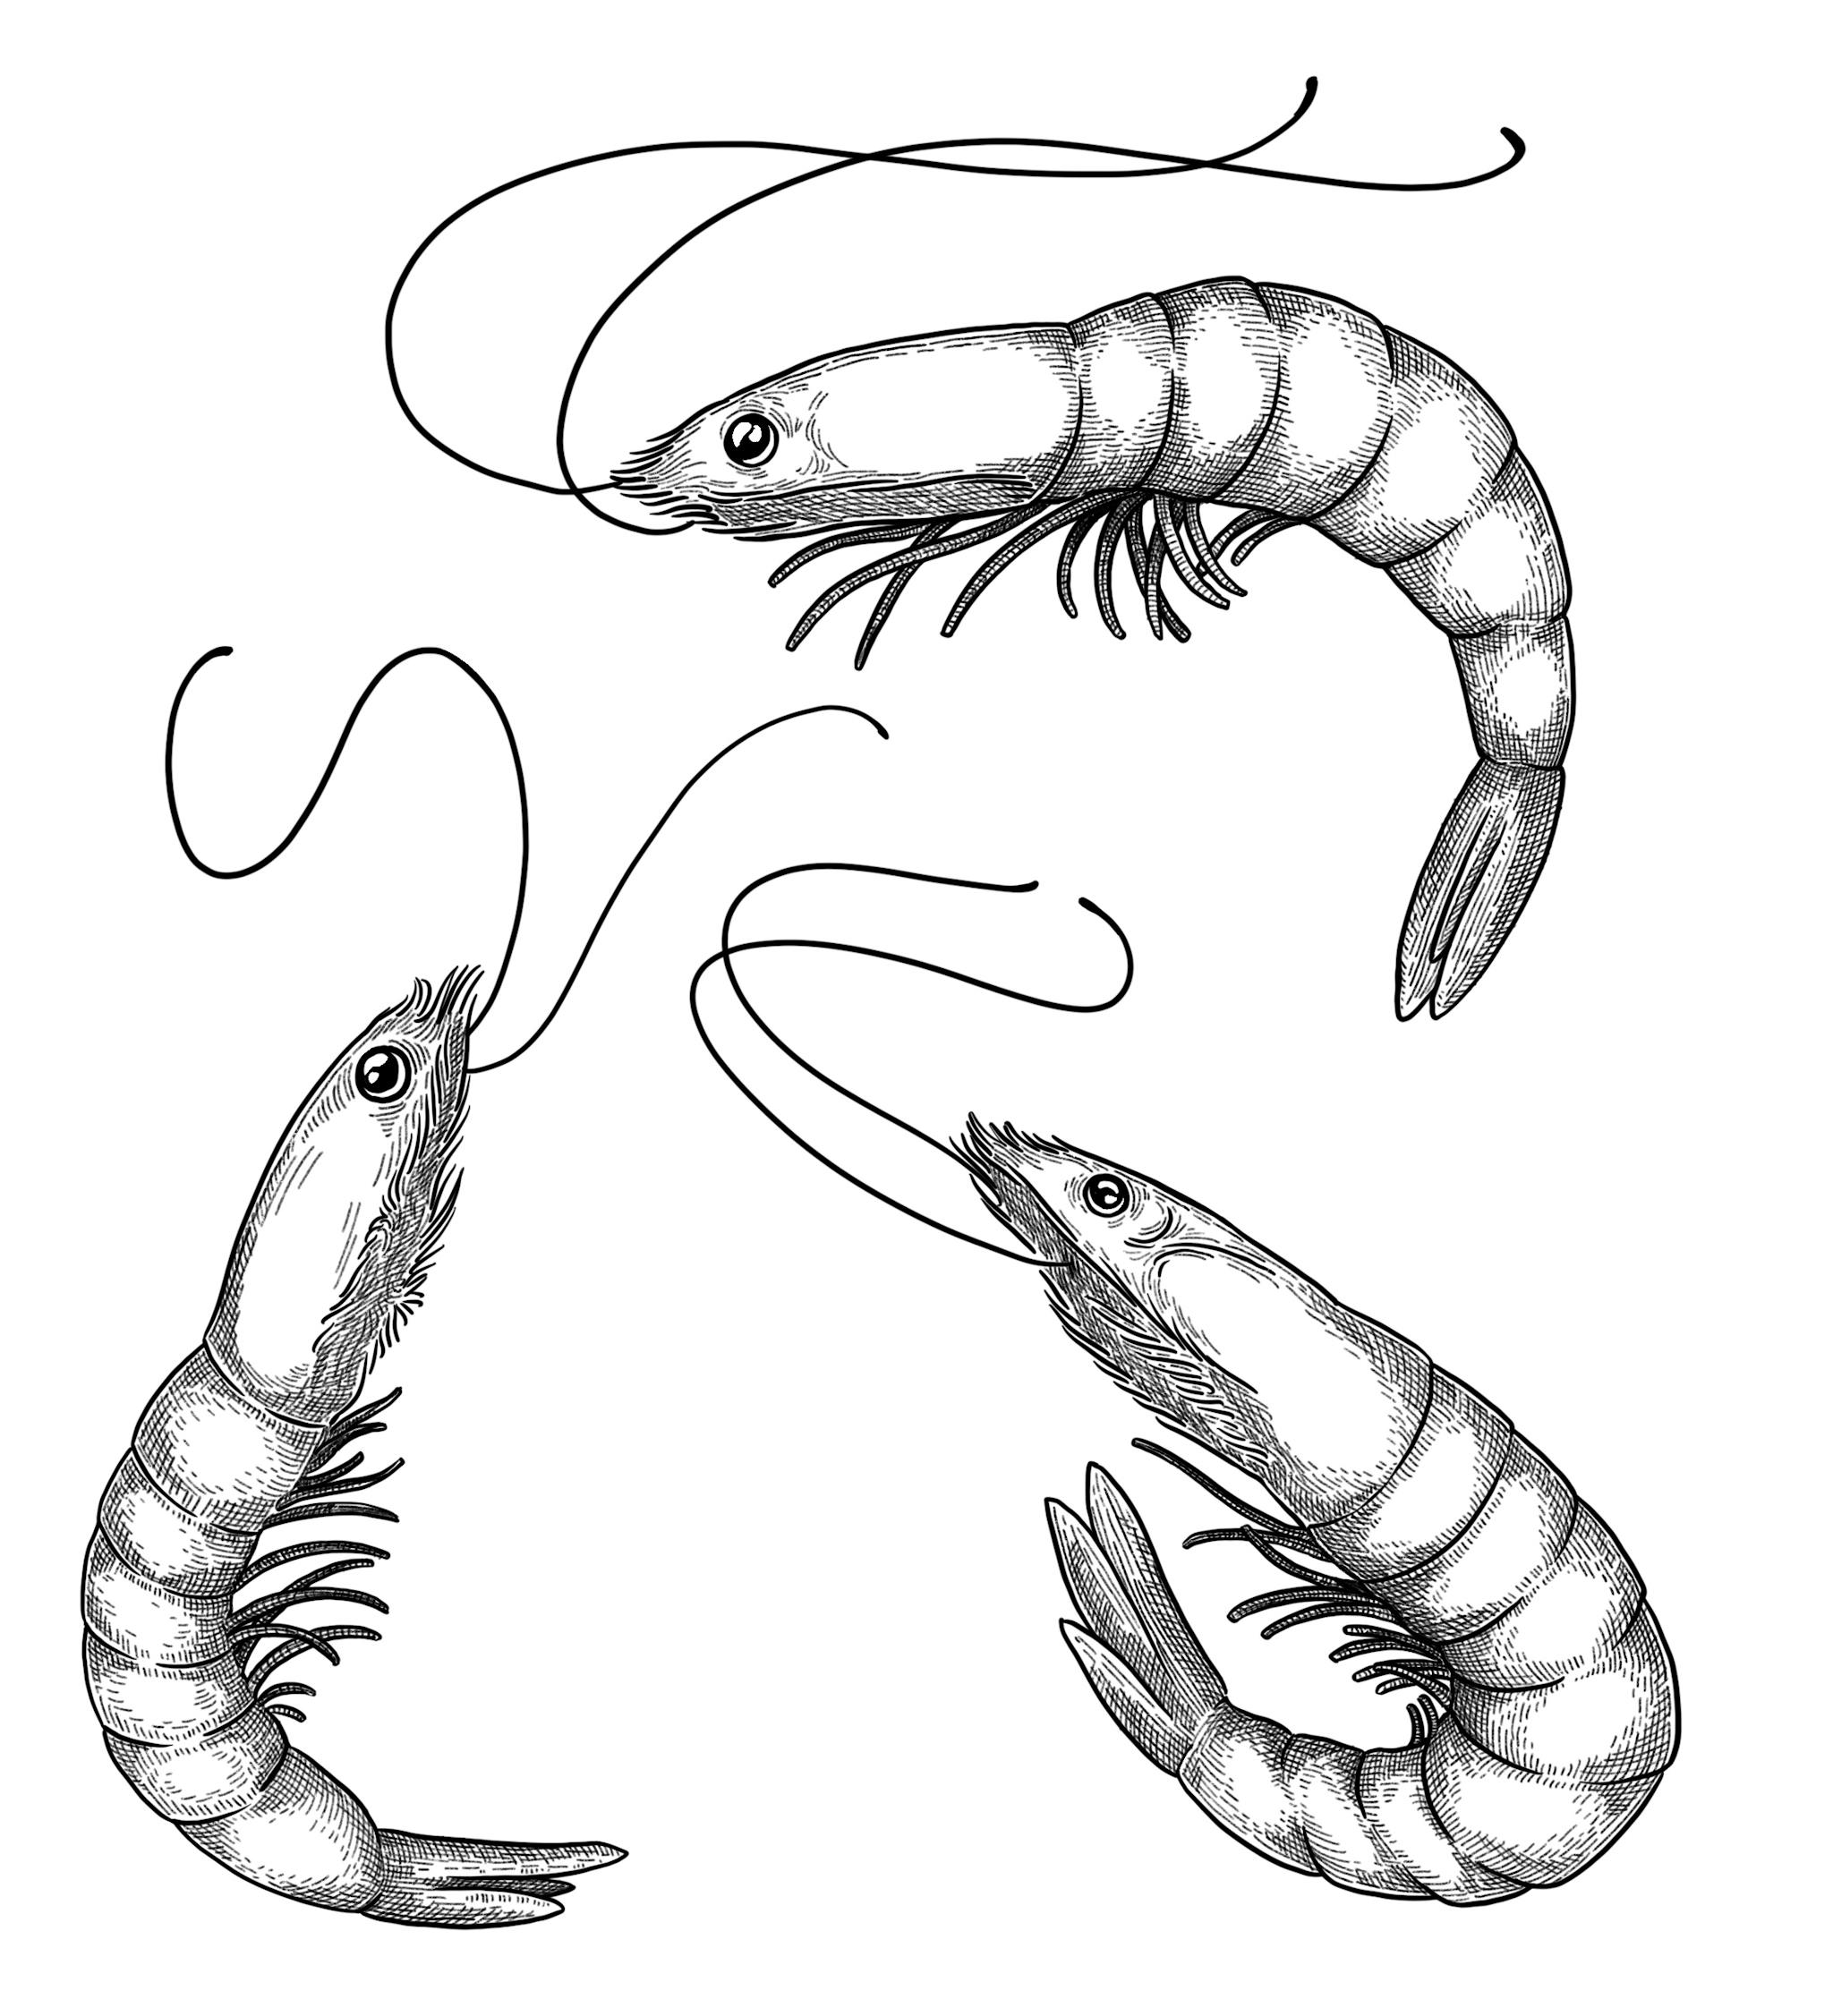 Shrimps illustrations for San diego Magazine.